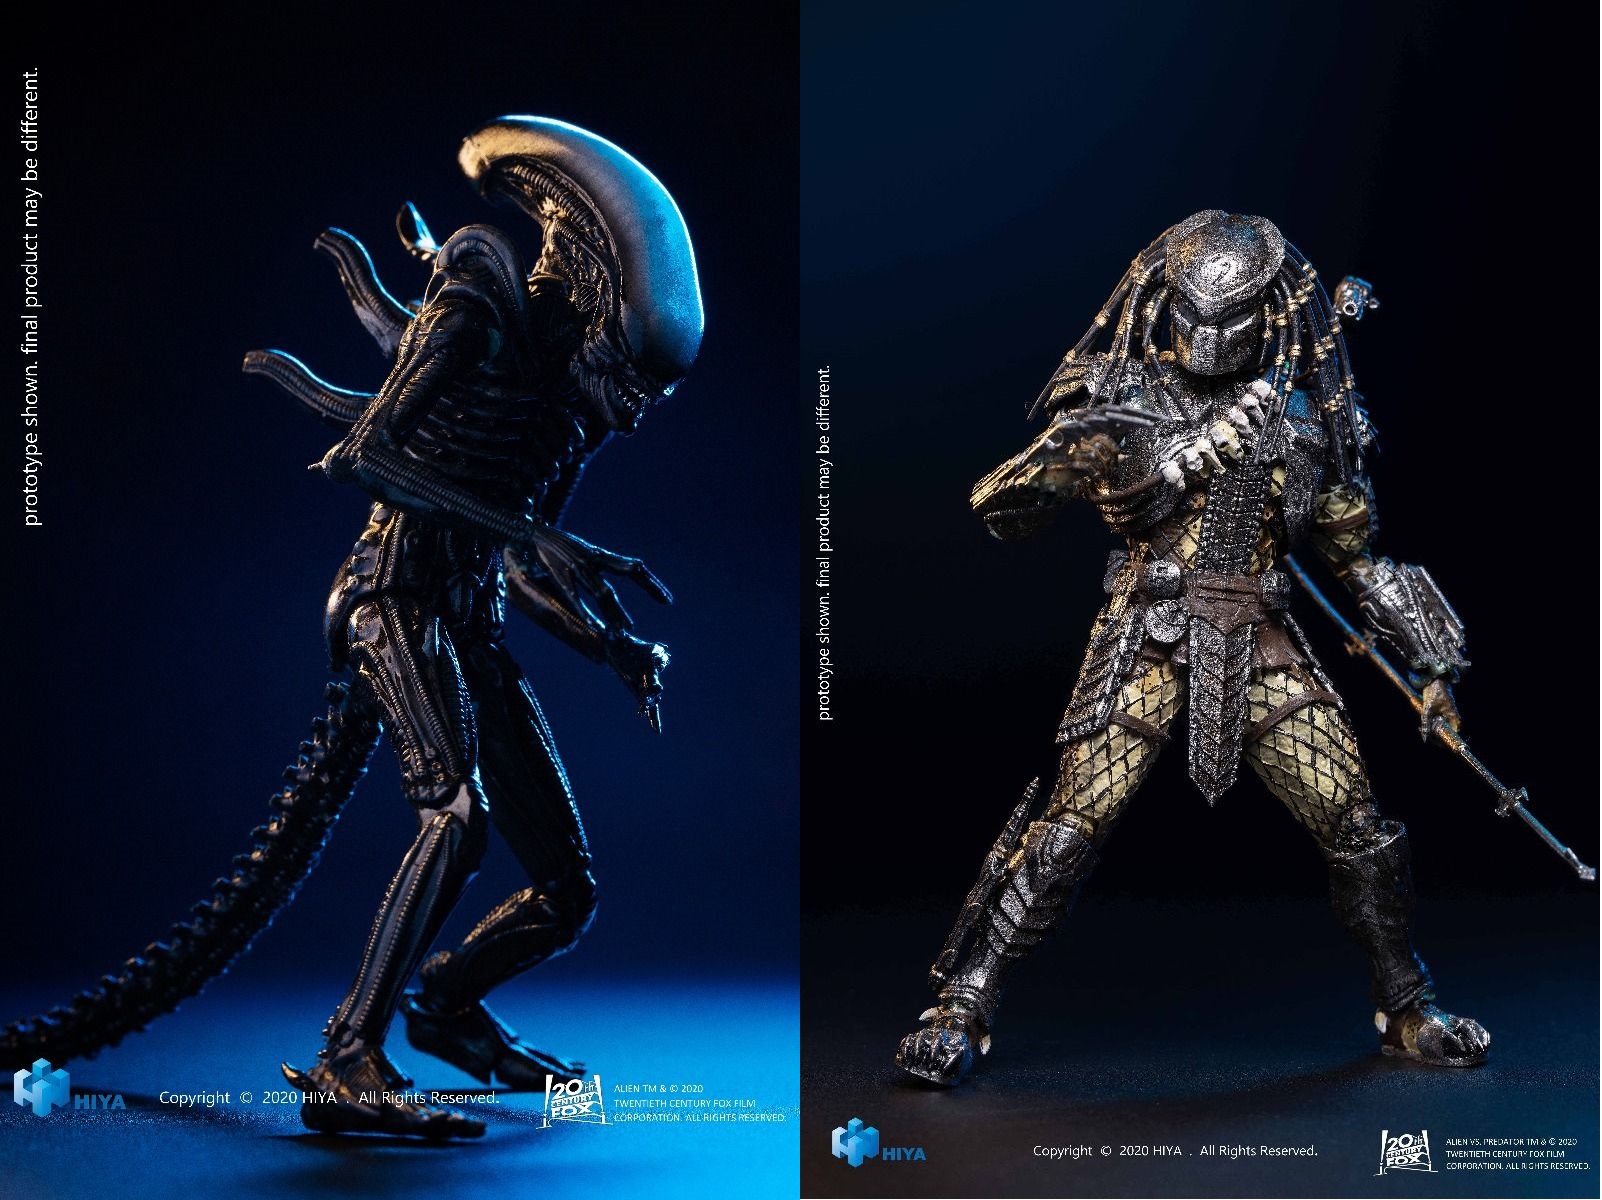 Hiya Toys announce Alien and Predator action figures